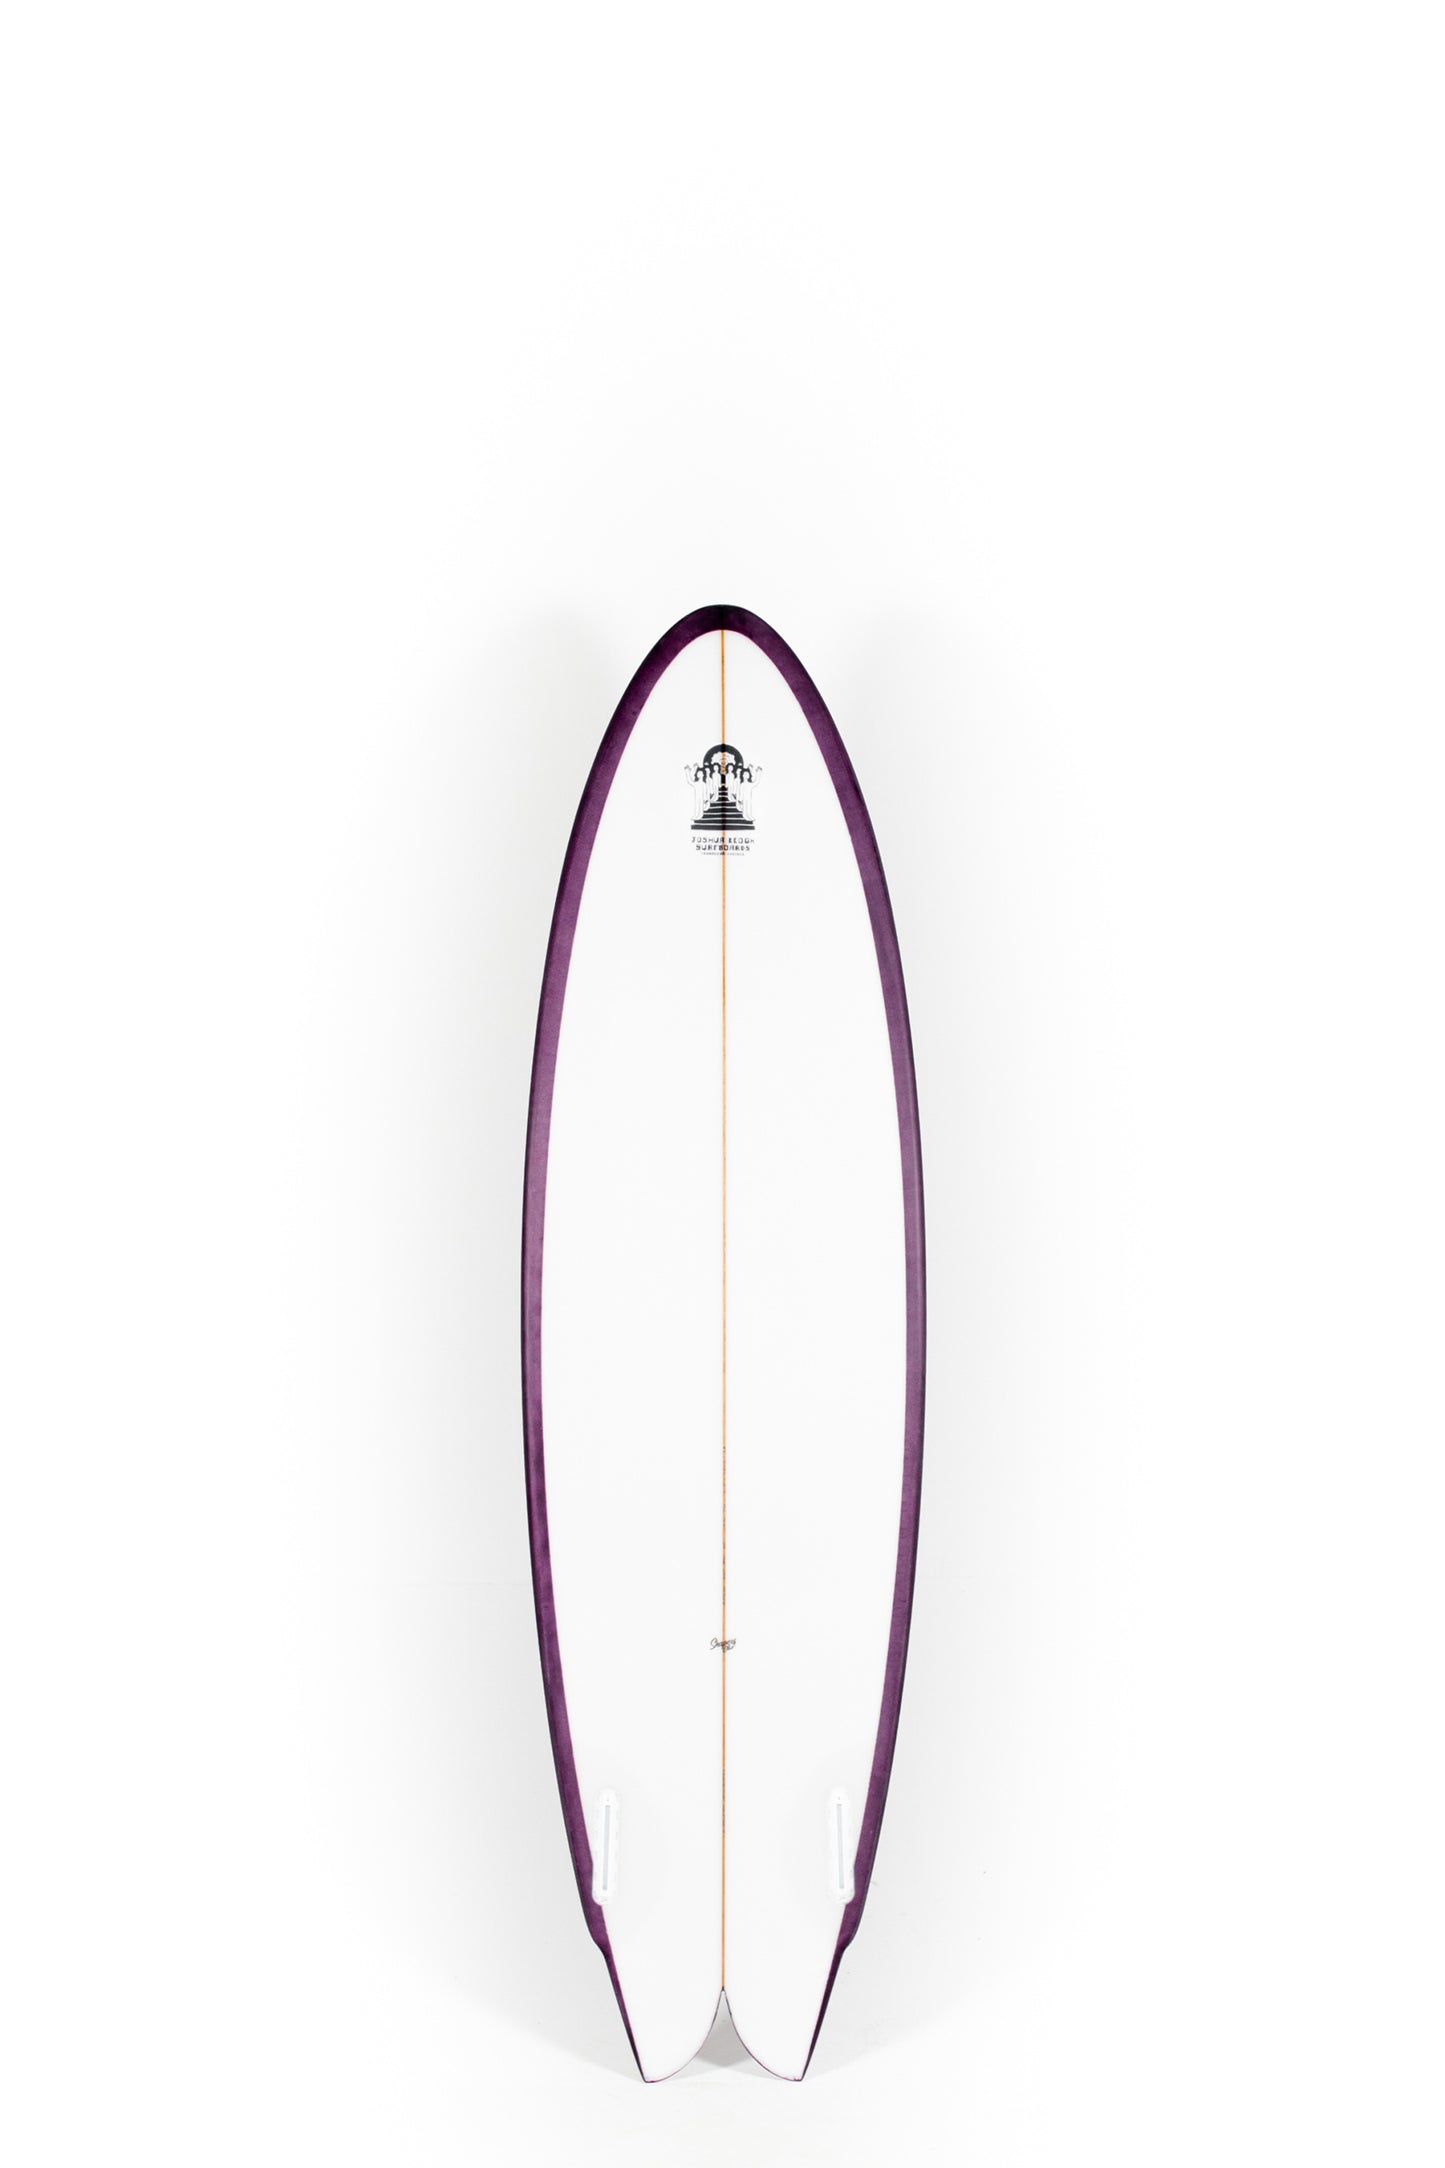 Pukas Surf Shop - Joshua Keogh Surfboard - M2 FLAT by Joshua Keogh - 6'6" x 20 7/8 x 2 5/8 - FLAT66